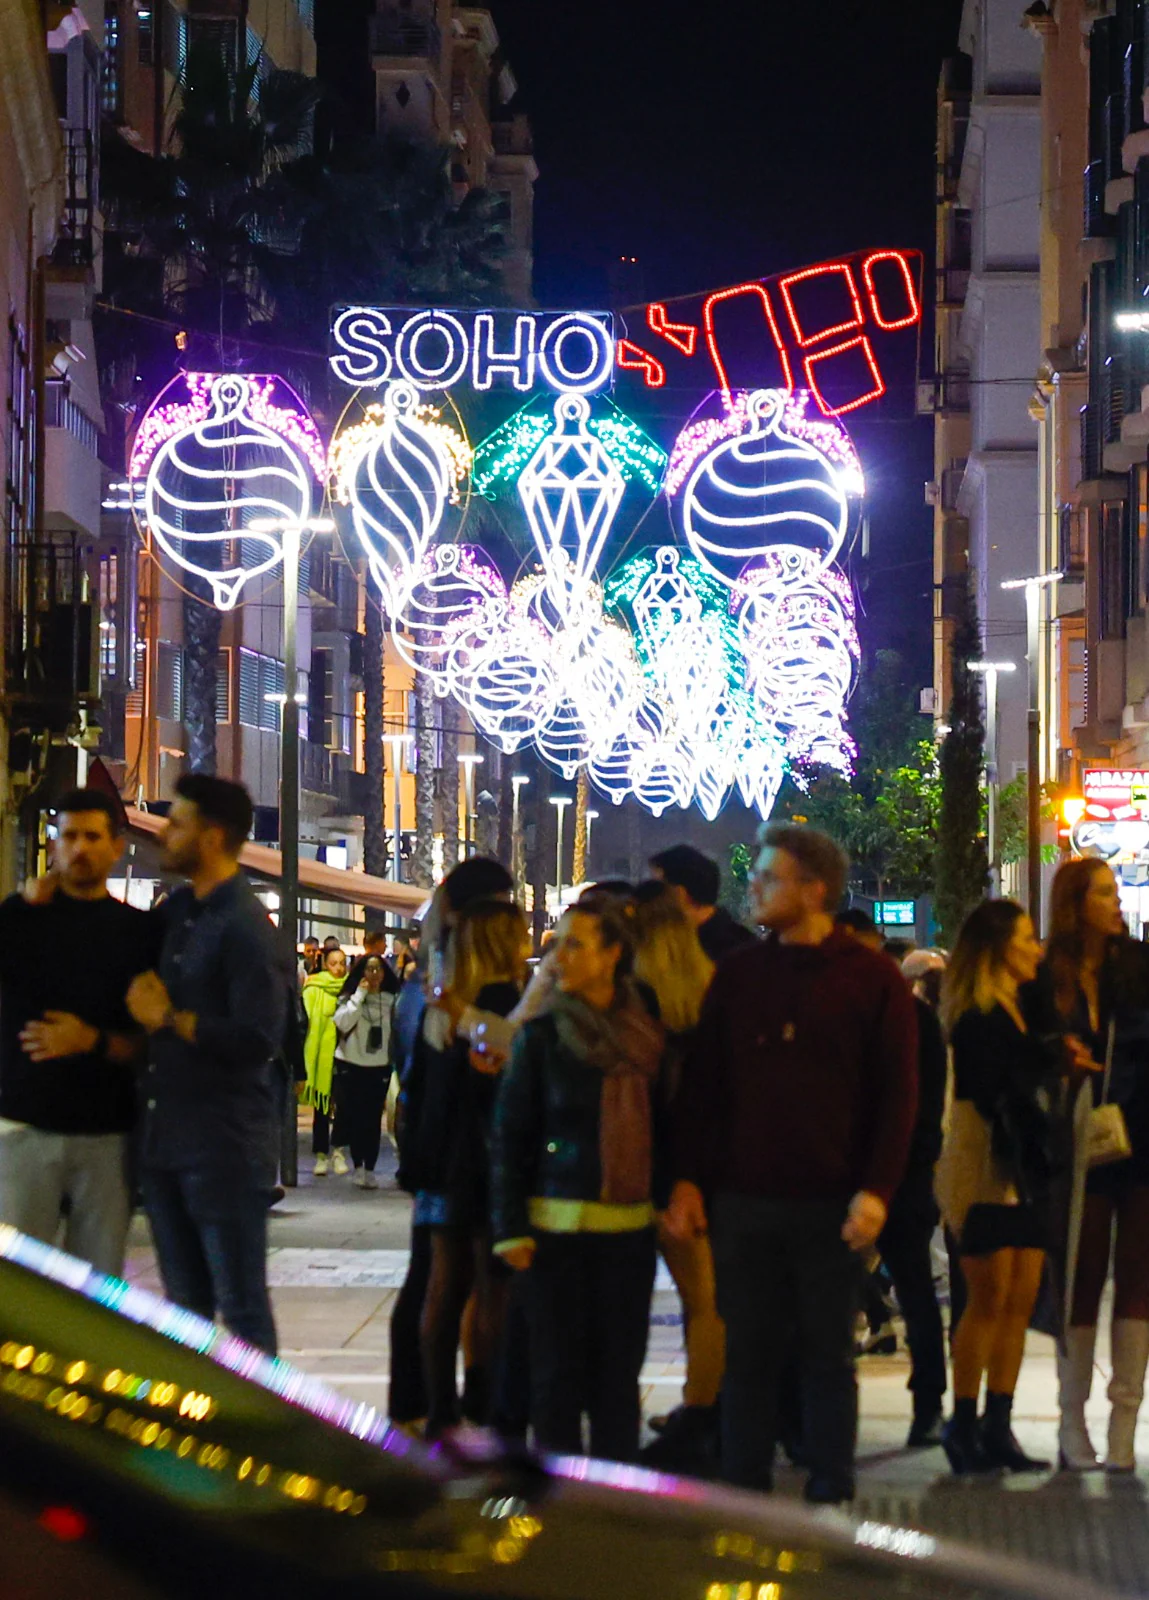 Christmas lights in Malaga city centre.